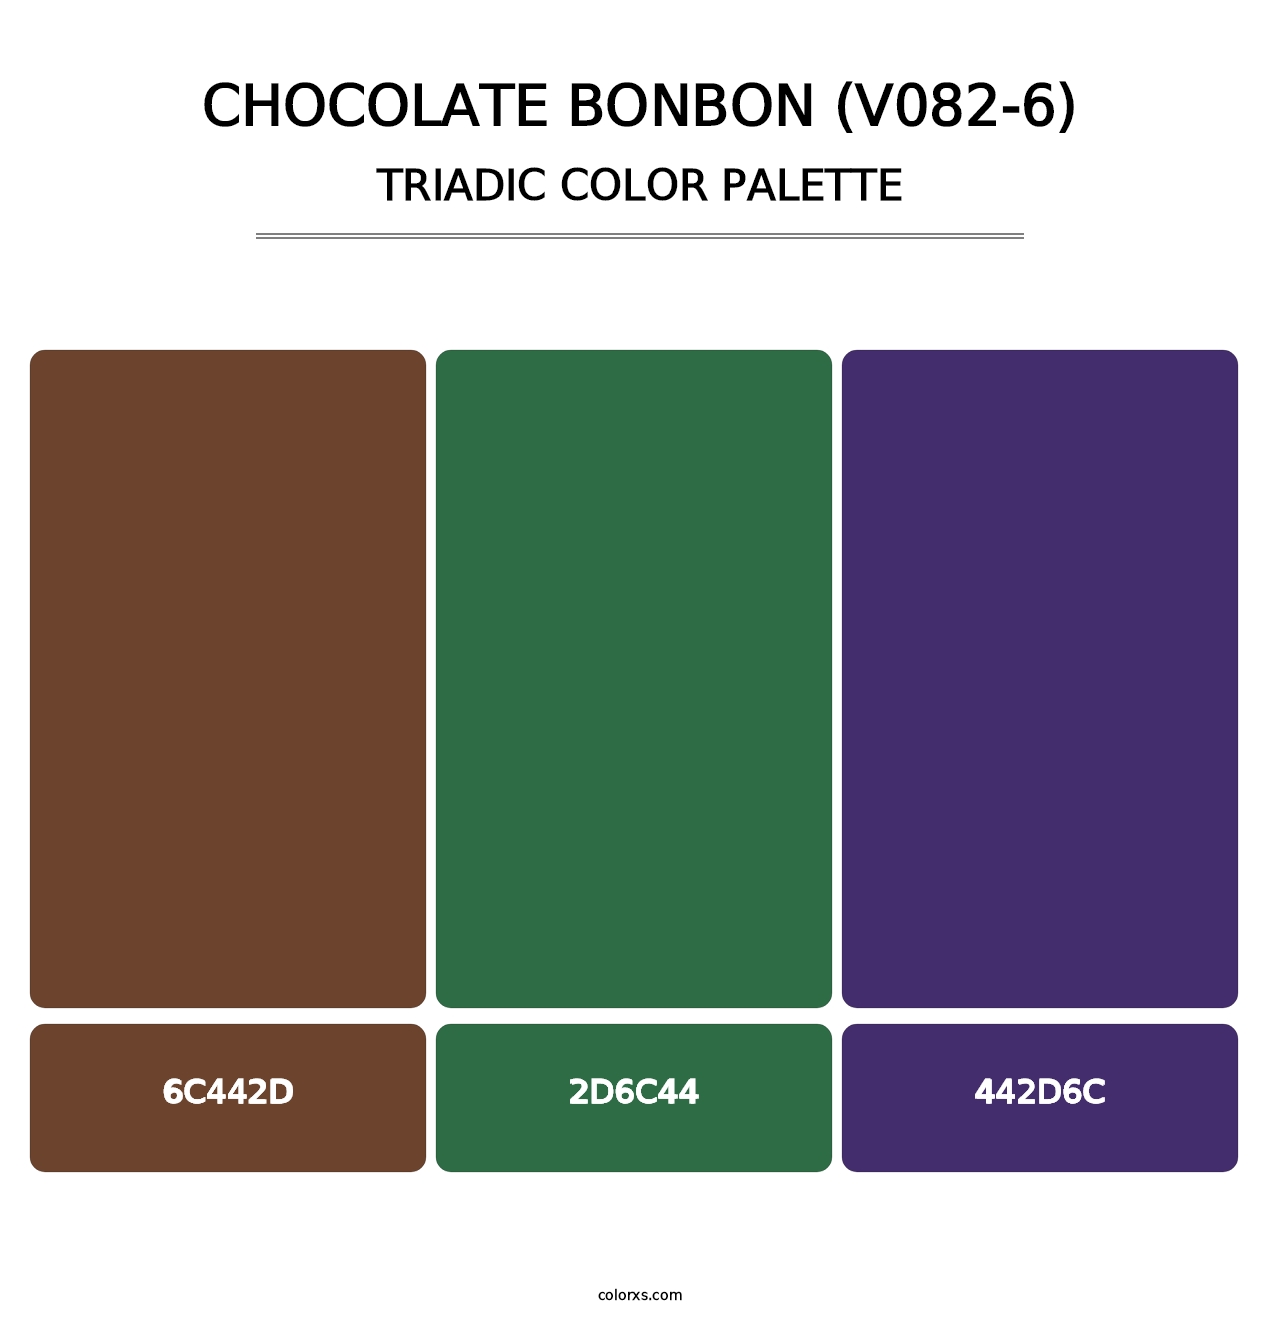 Chocolate Bonbon (V082-6) - Triadic Color Palette